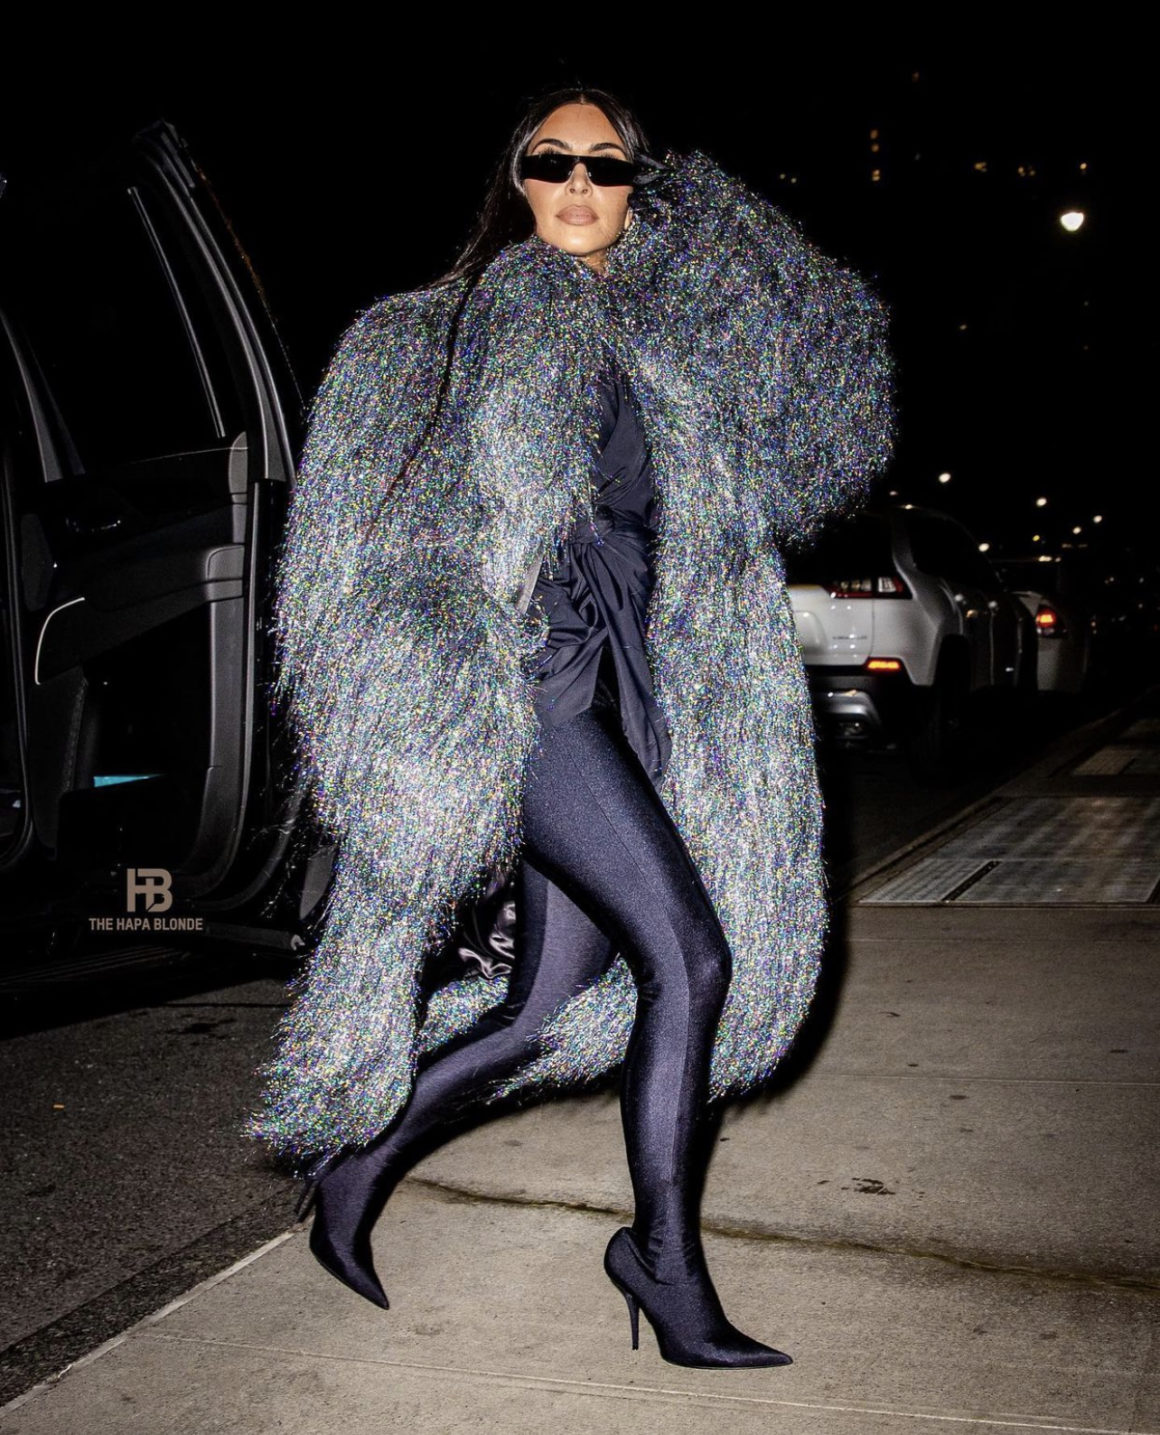 Kim Kardashian caught wearing butt pads under skirt – New York